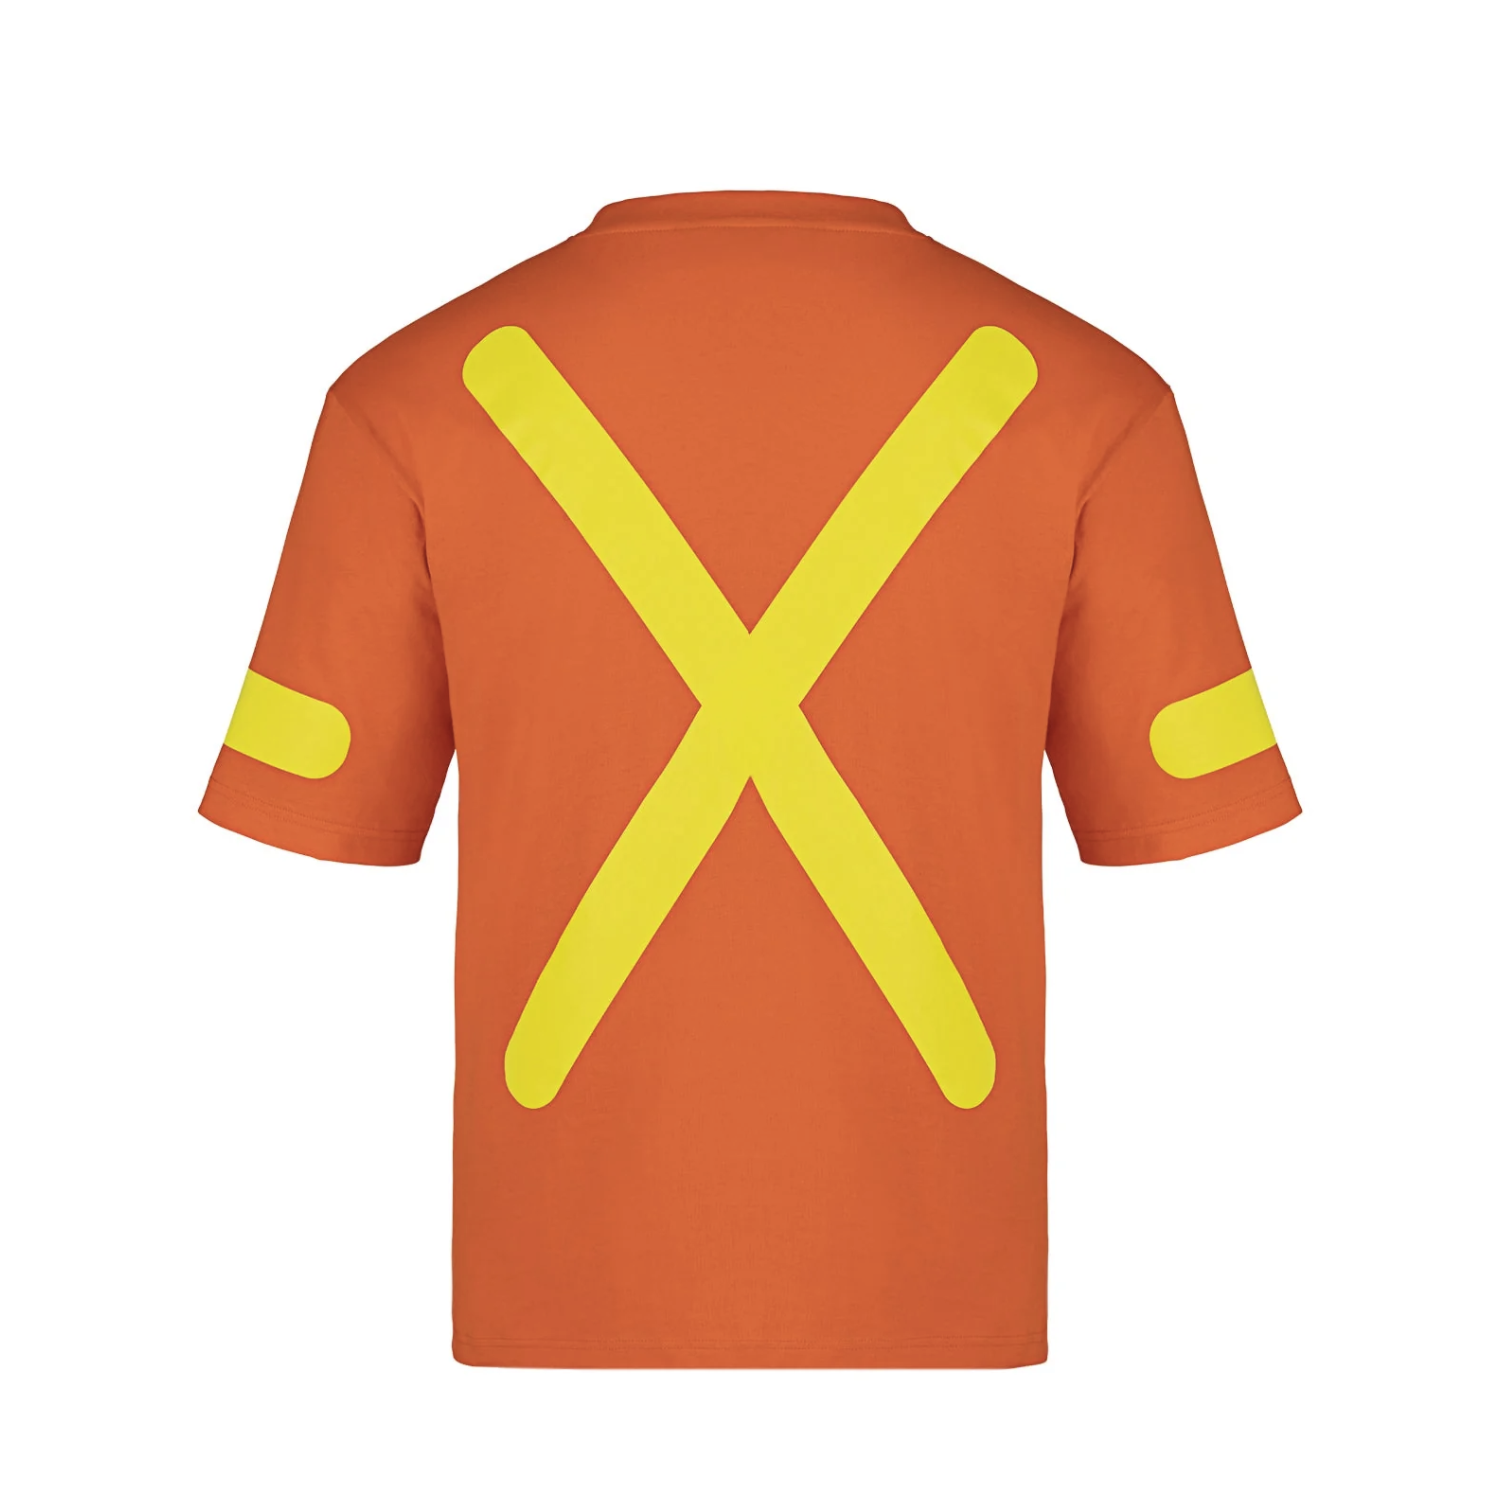 S05933 - Sentry - Men's Cotton Safety T-Shirt - promopig